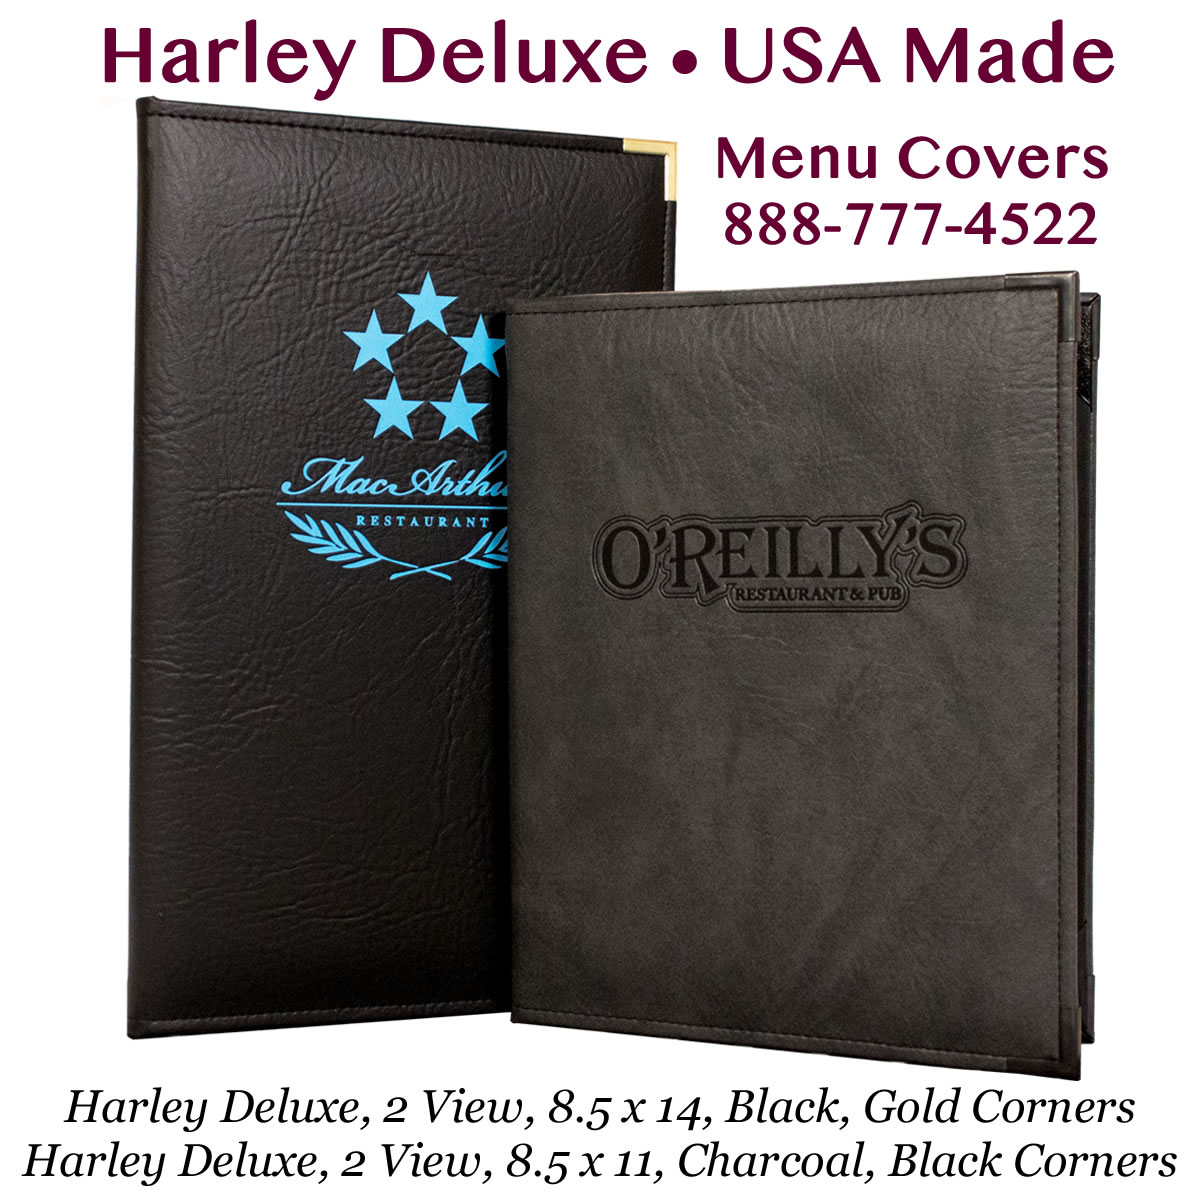 Harley Deluxe Menu Jackets for restaurants and bistros.